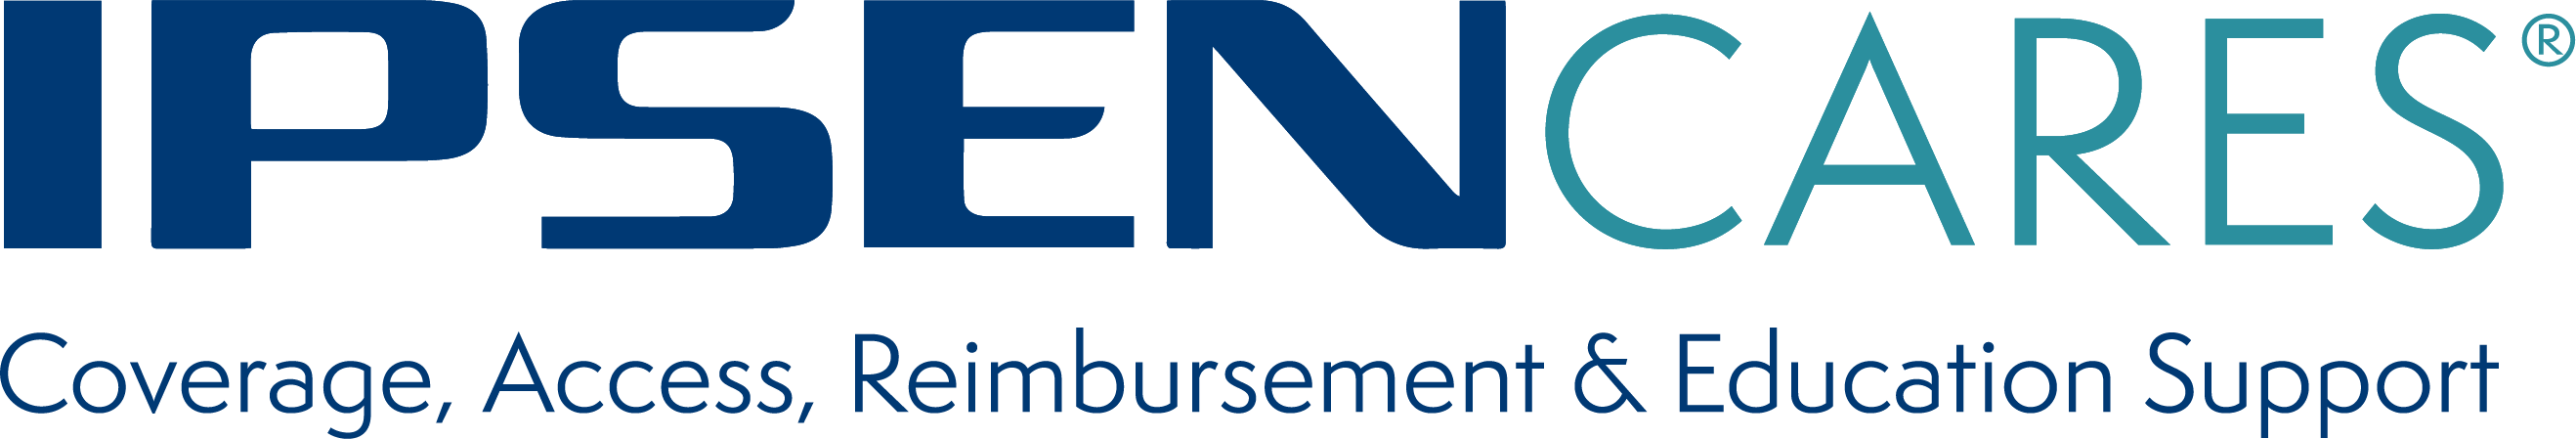 IpsenCares logo